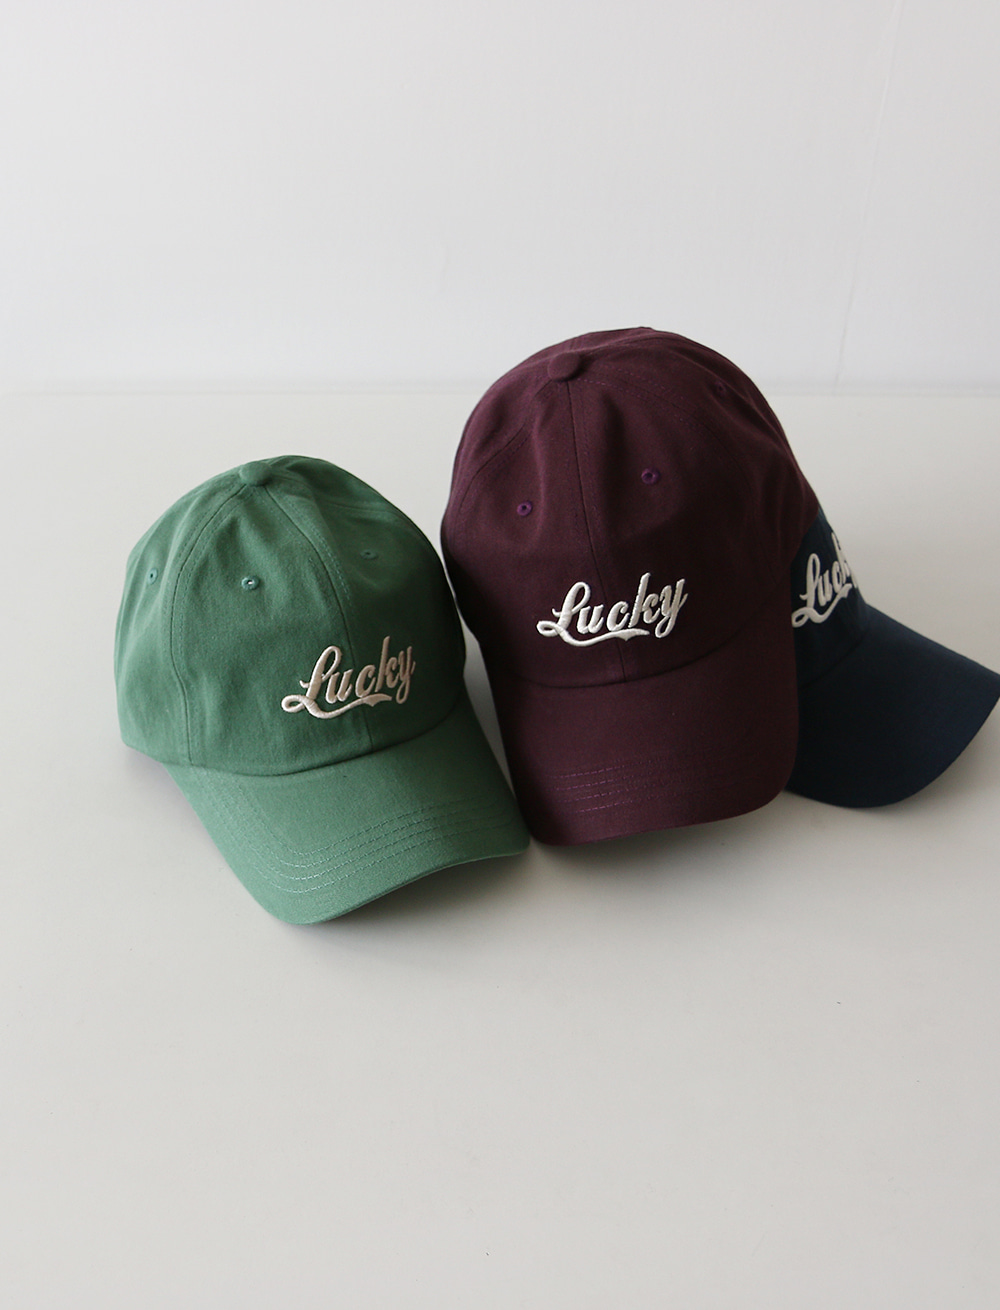 lucky cap (9c)